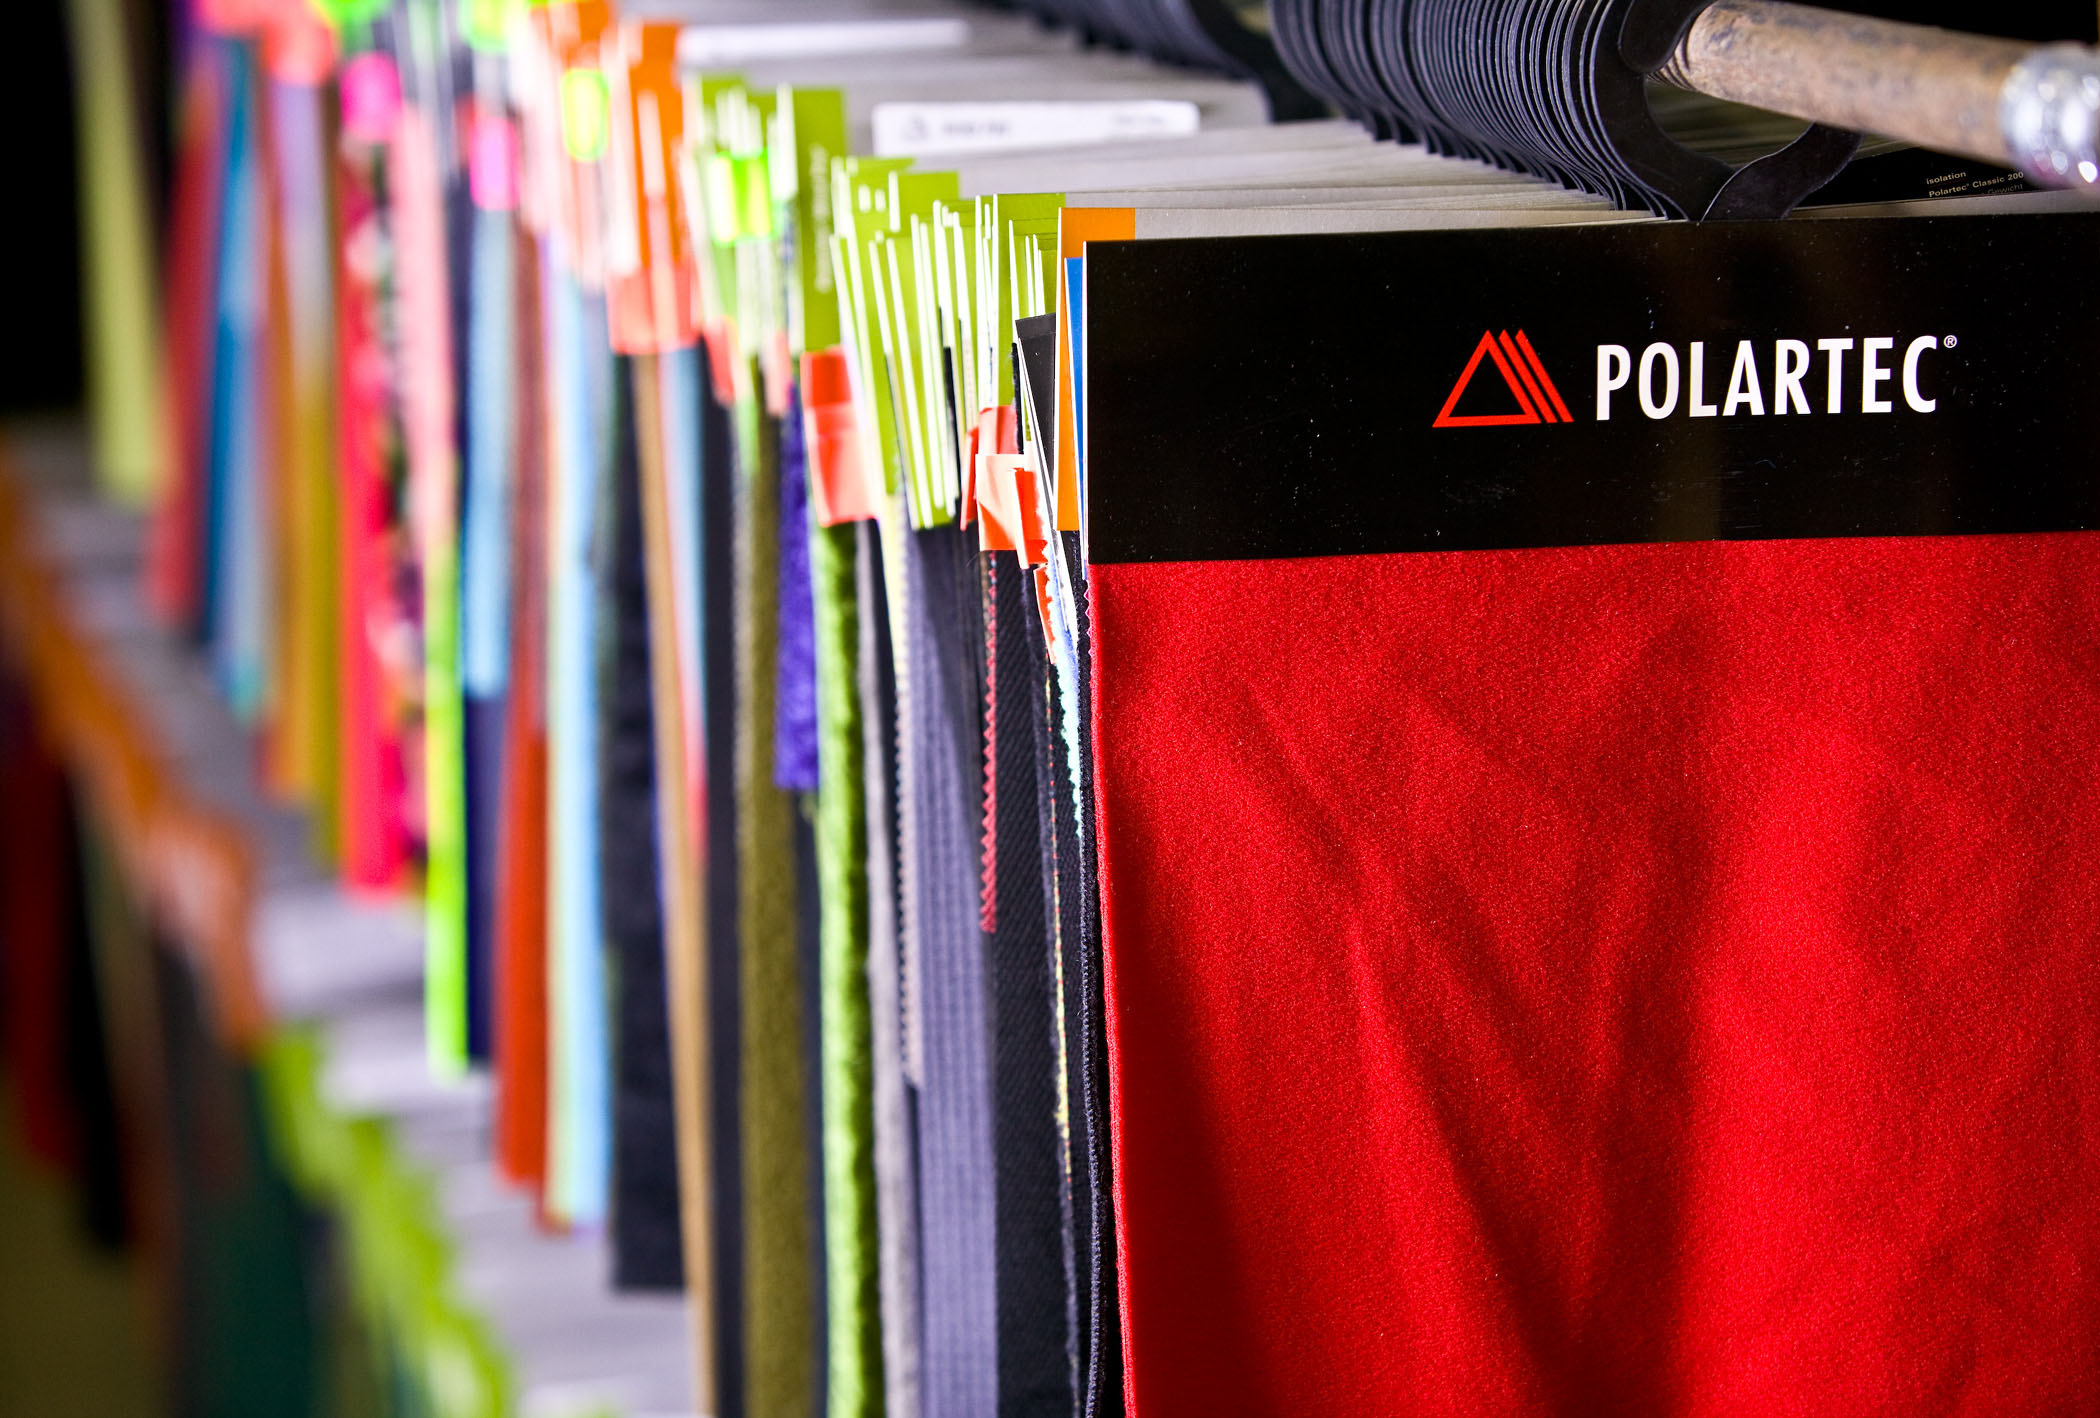 Milliken & Company adquirirá Polartec a Versa Capital Management